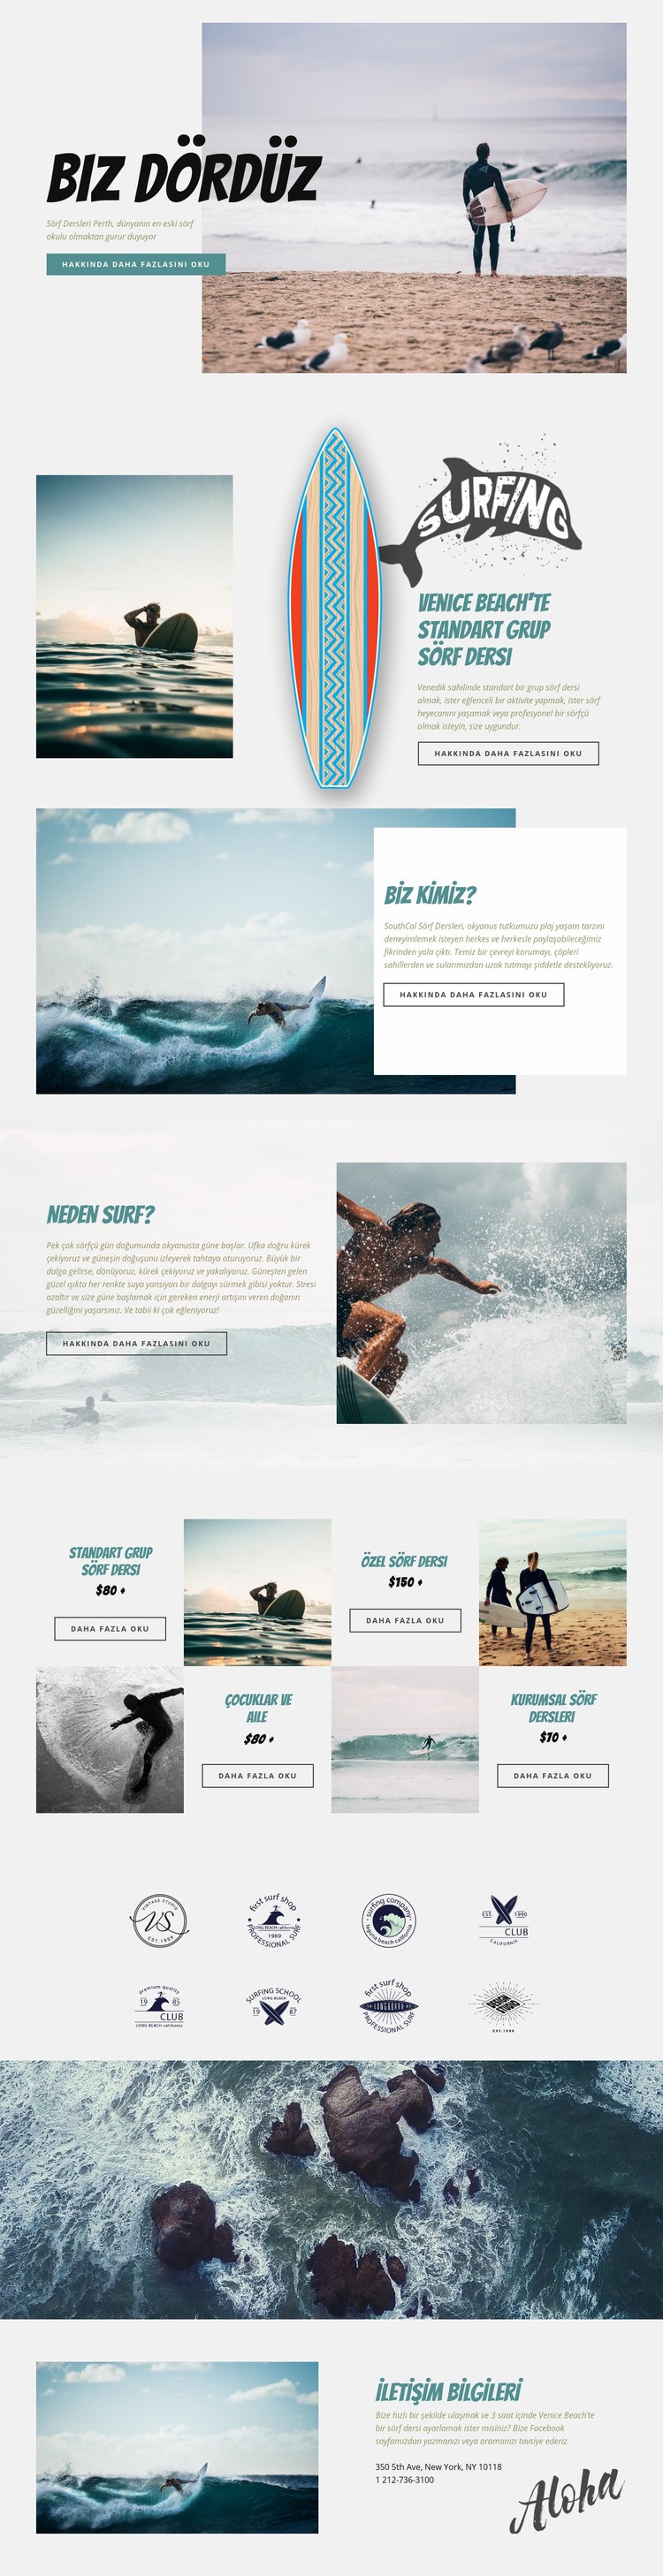 Sörf yapmak Açılış sayfası